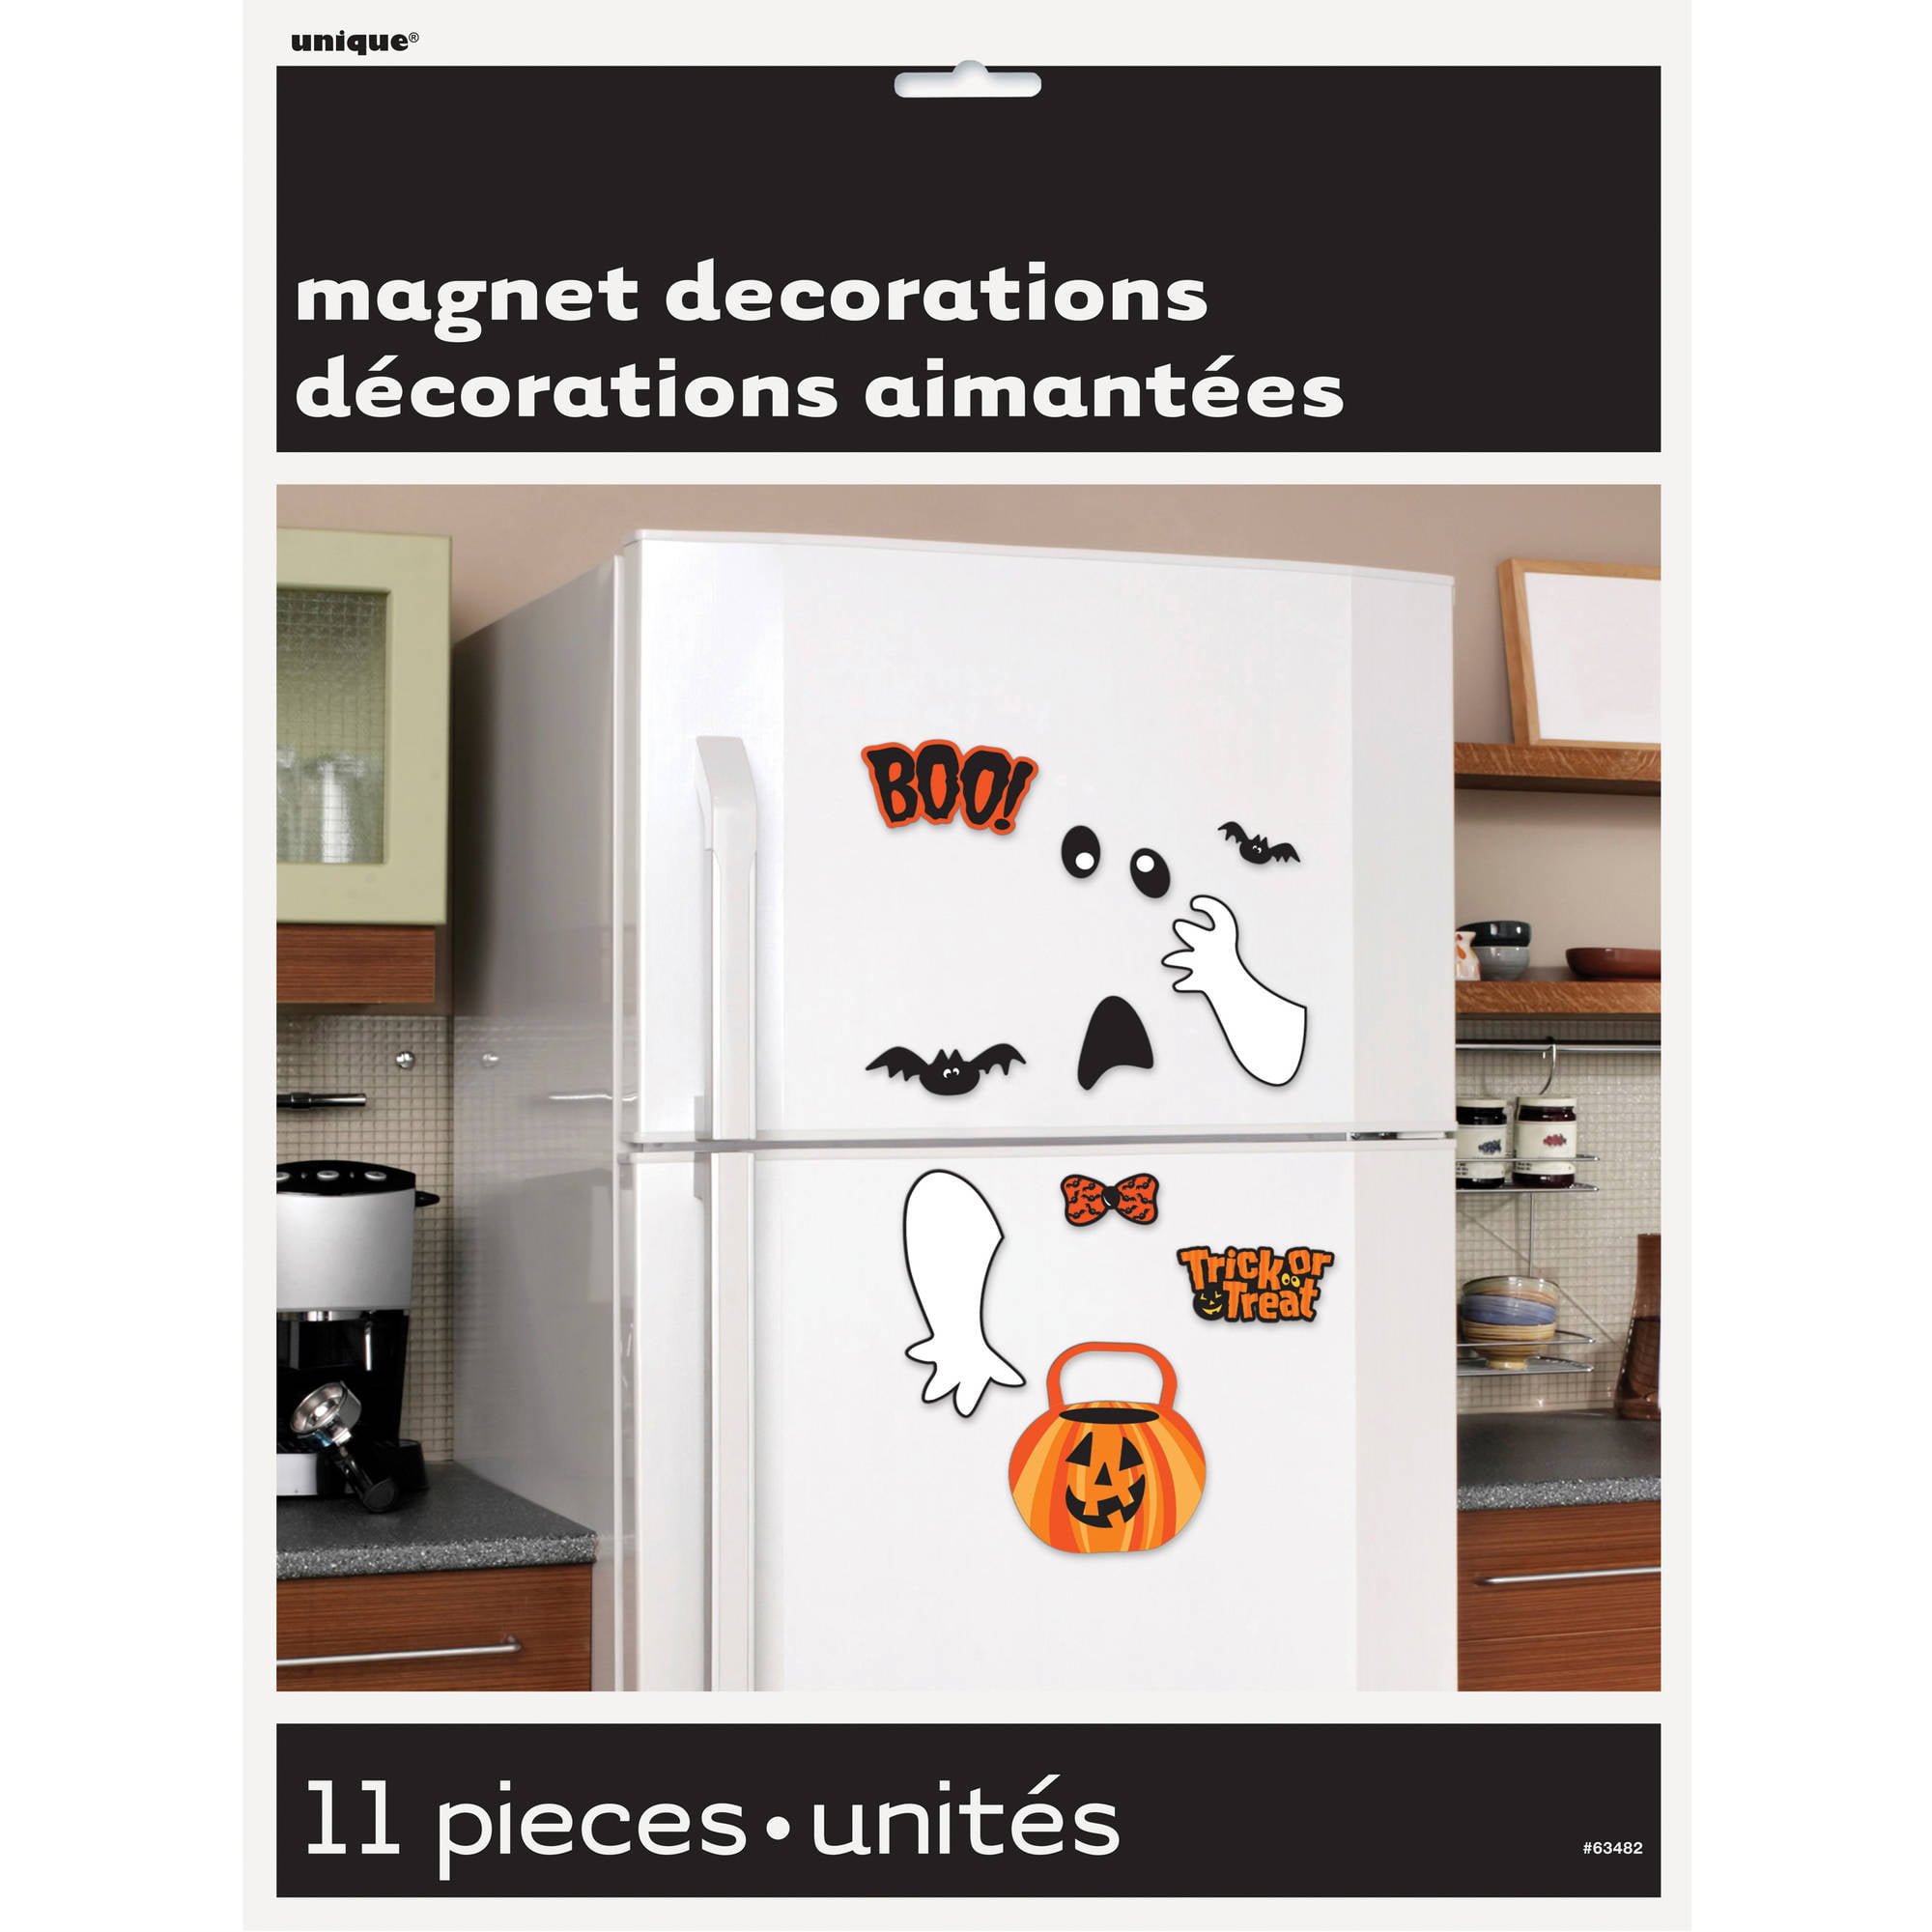 26++ Big themed refrigerator magnets information